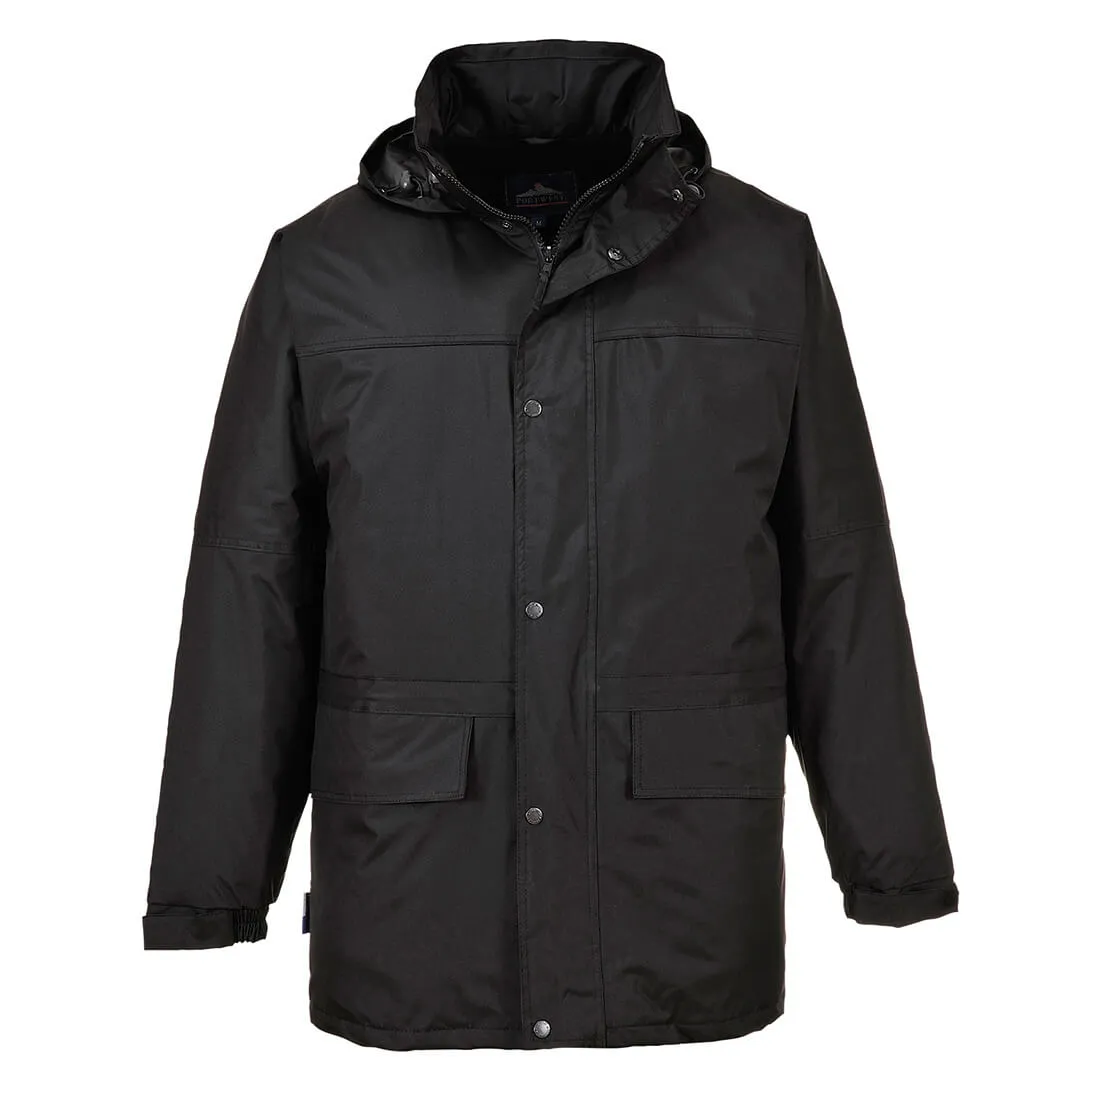 Portwest Mens Oban Fleece Lined Waterproof Jacket - Black, M